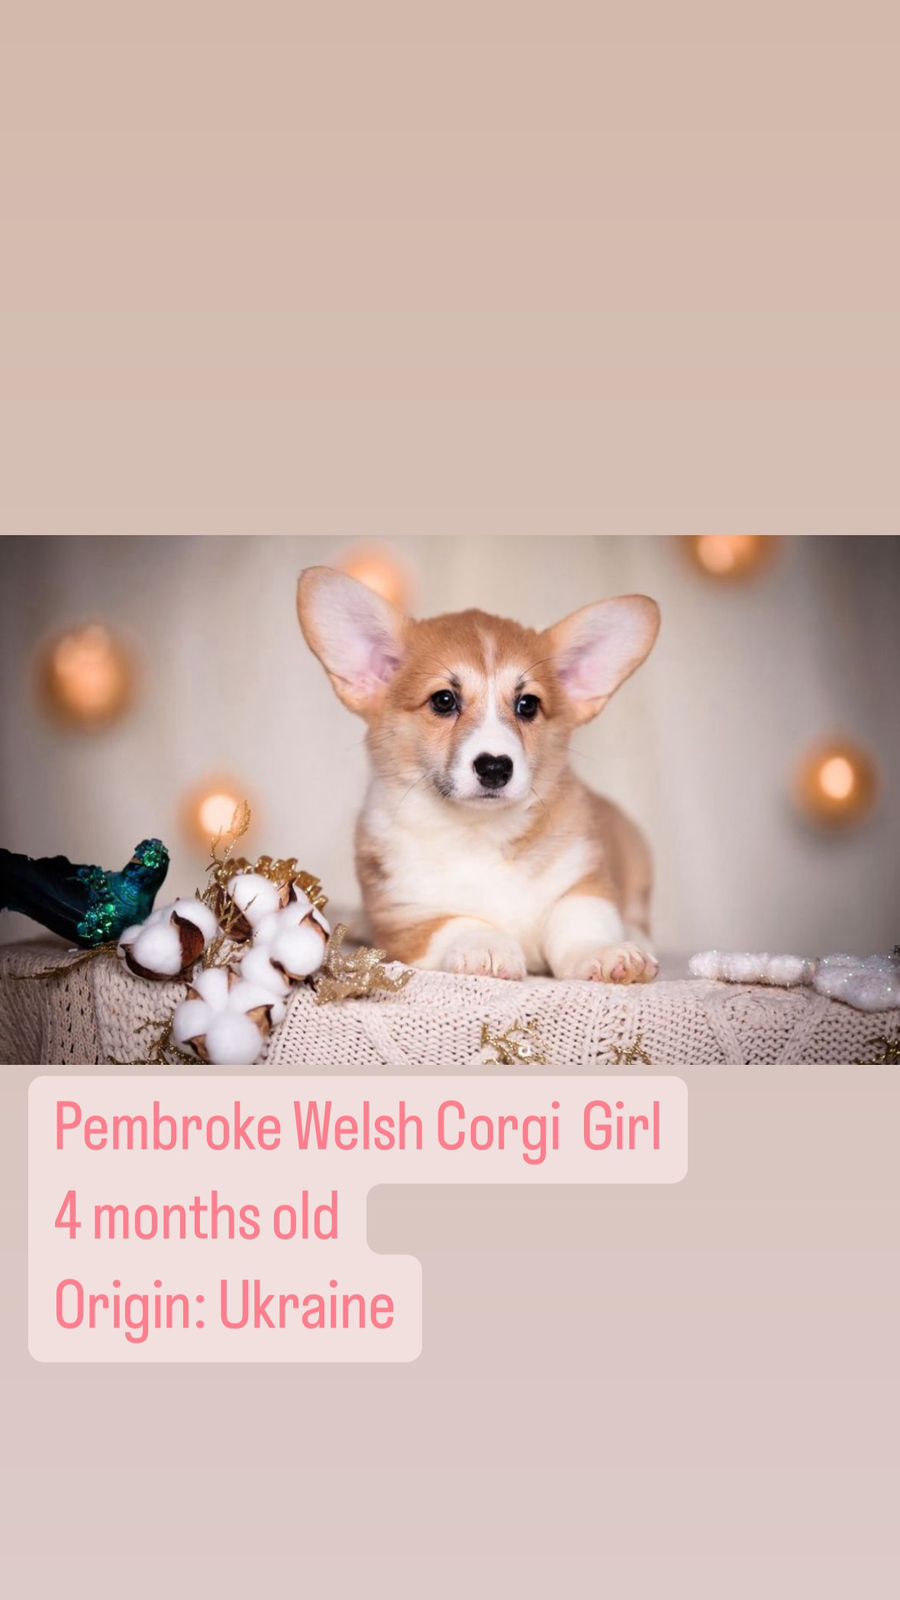 Pembroke Welsh Corgi Girl 4 months old Origin: Ukraine